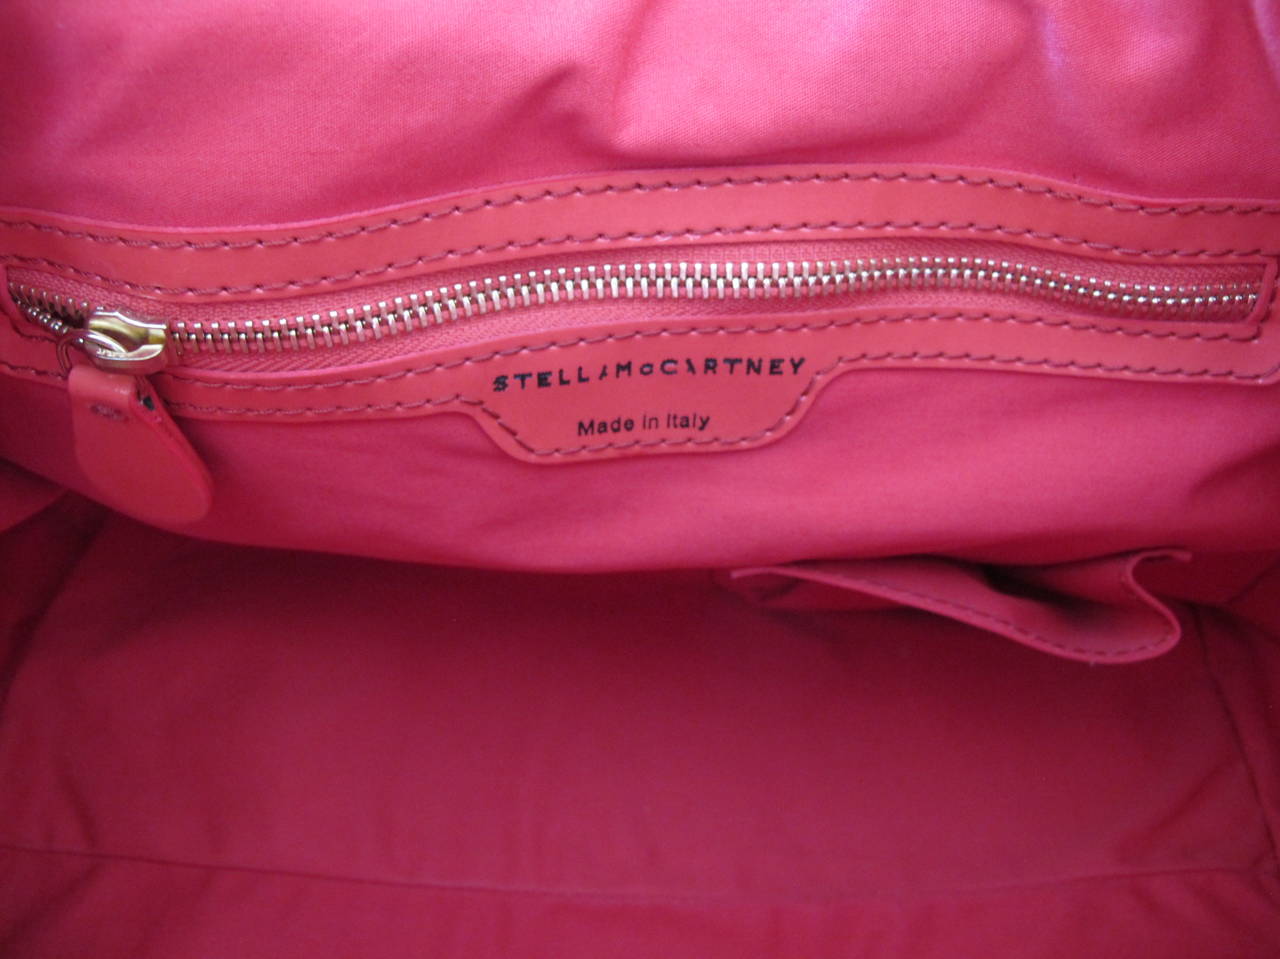 Stella McCartney Red and White Stripe Canvas Handbag For Sale 4